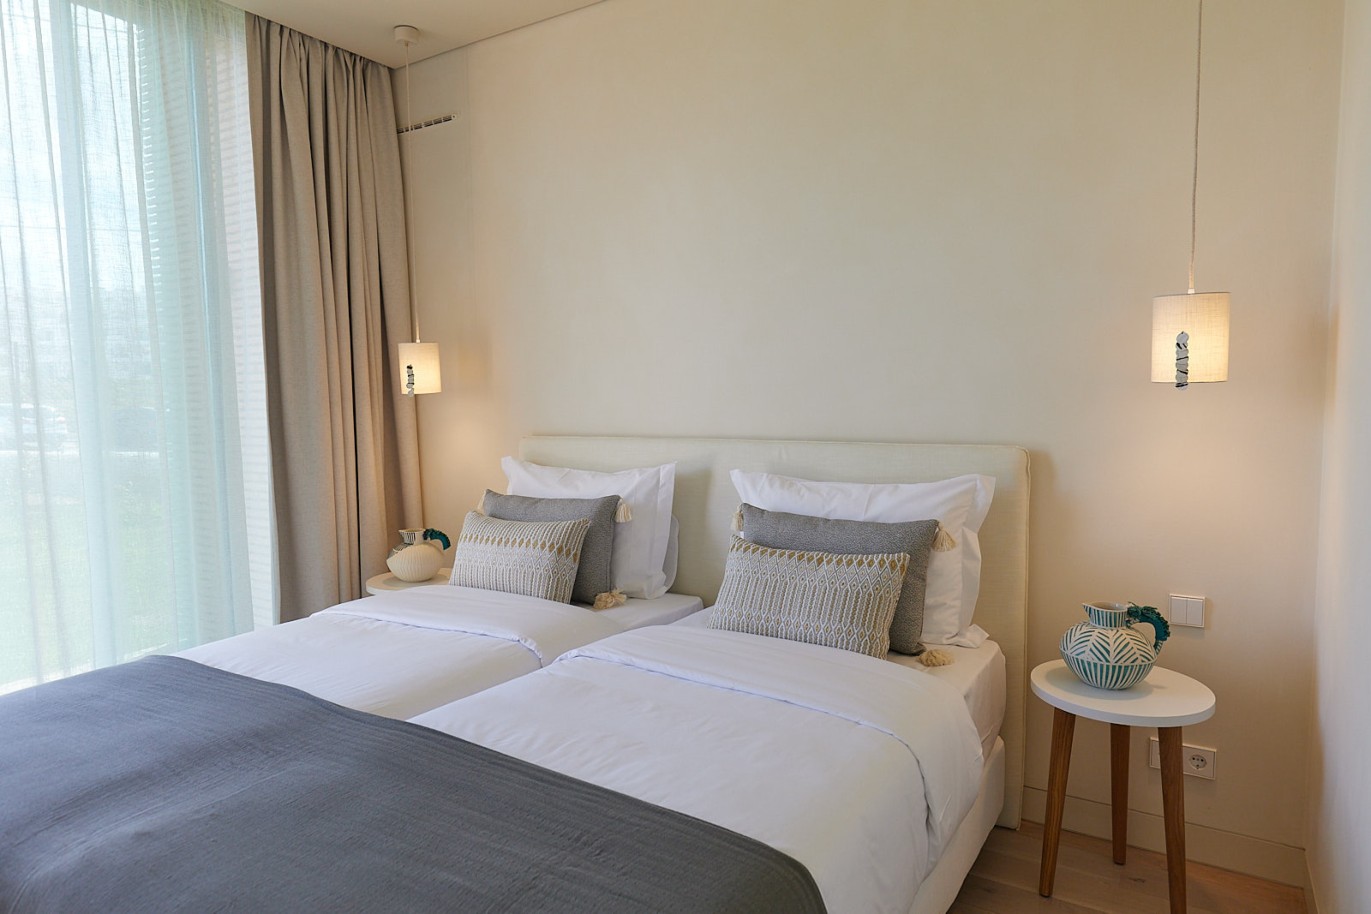 2 bedroom apartment in resort, for sale in Porches, Algarve_229077